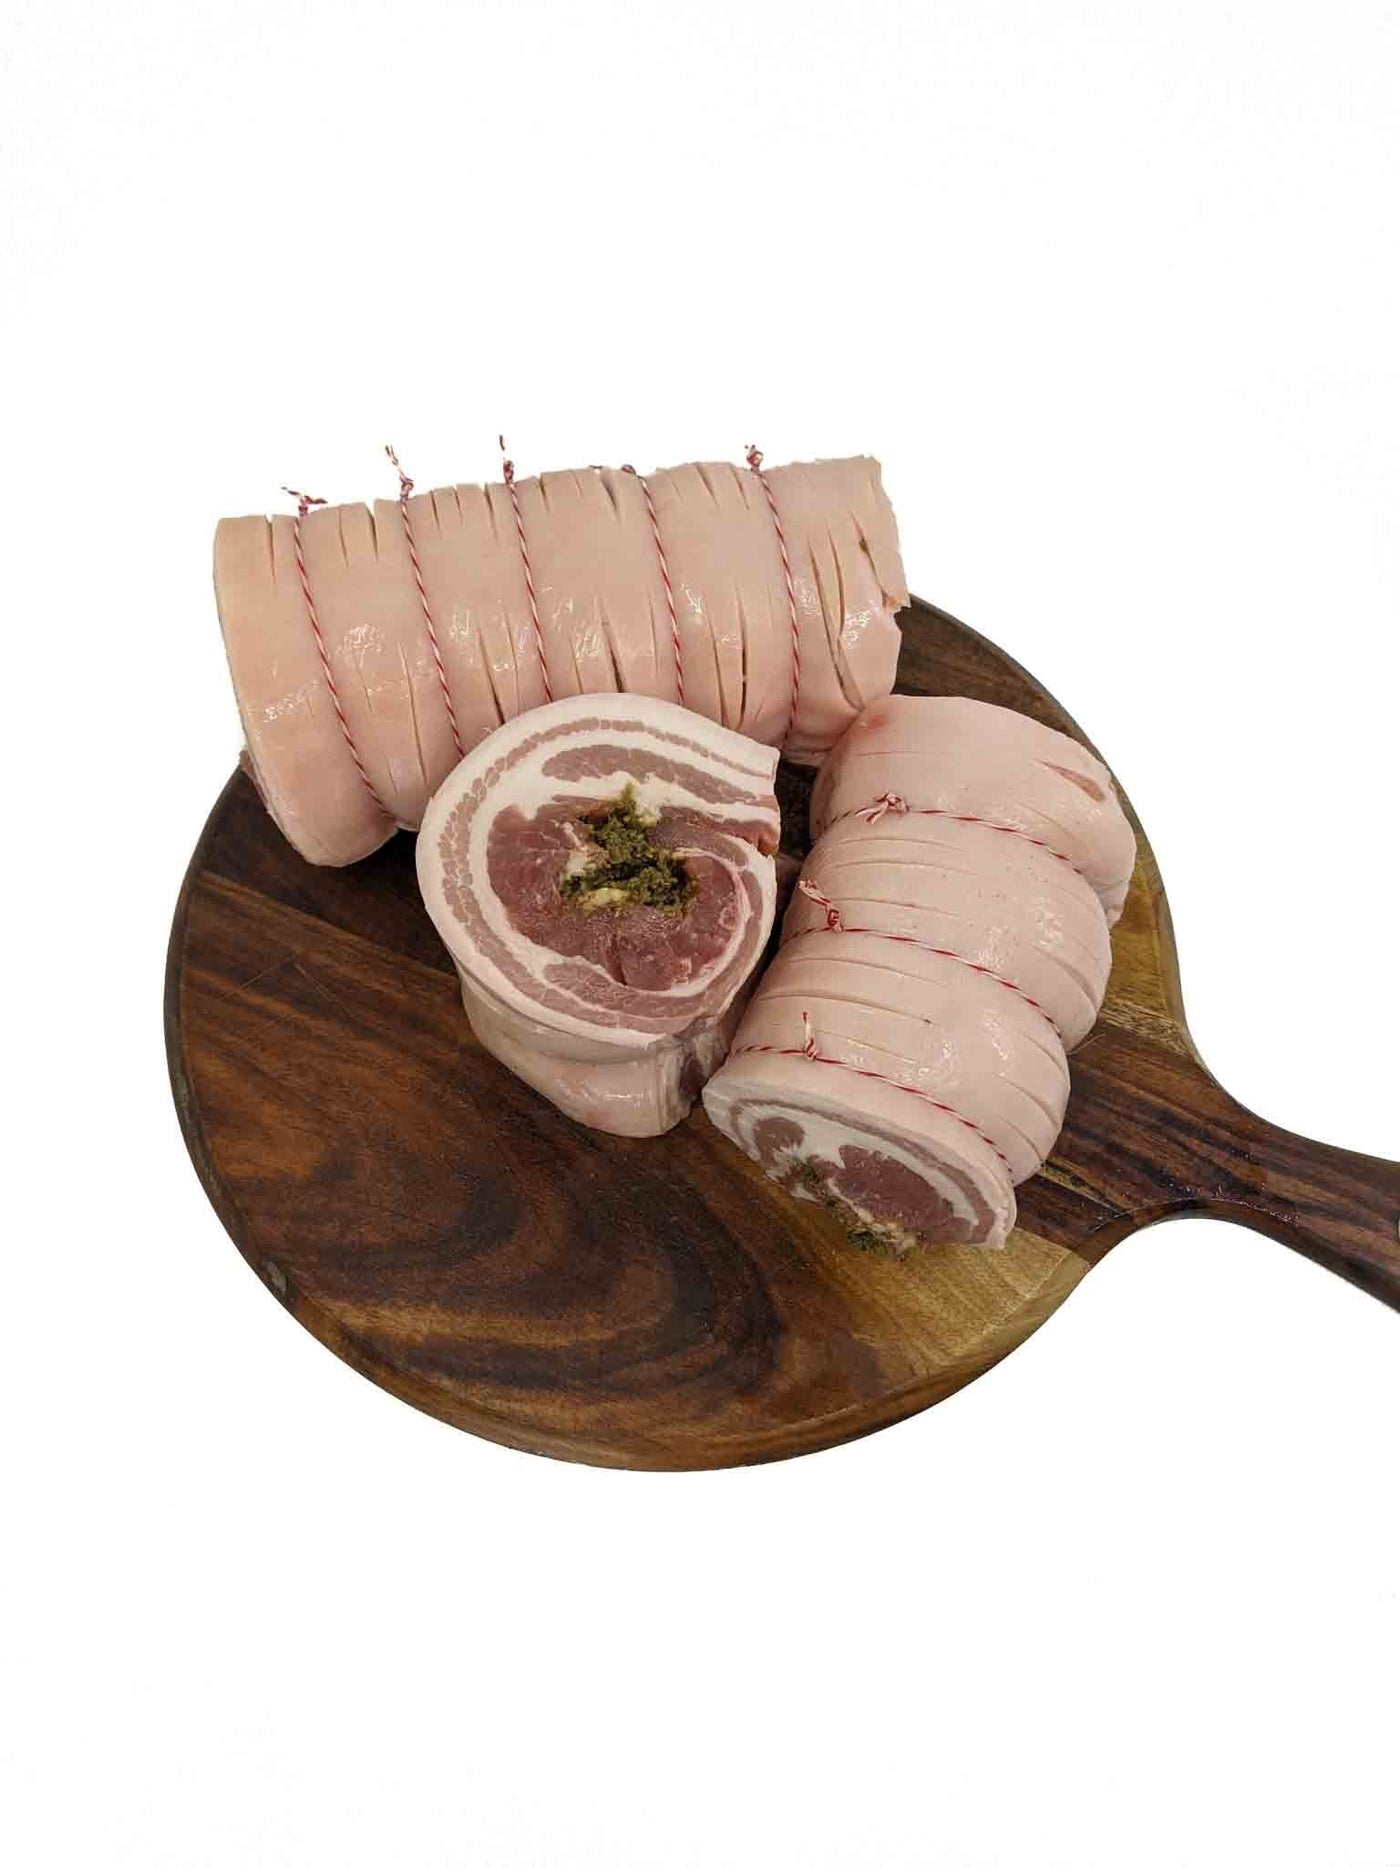 Pork Loin & Belly Porchetta | $24.99kg